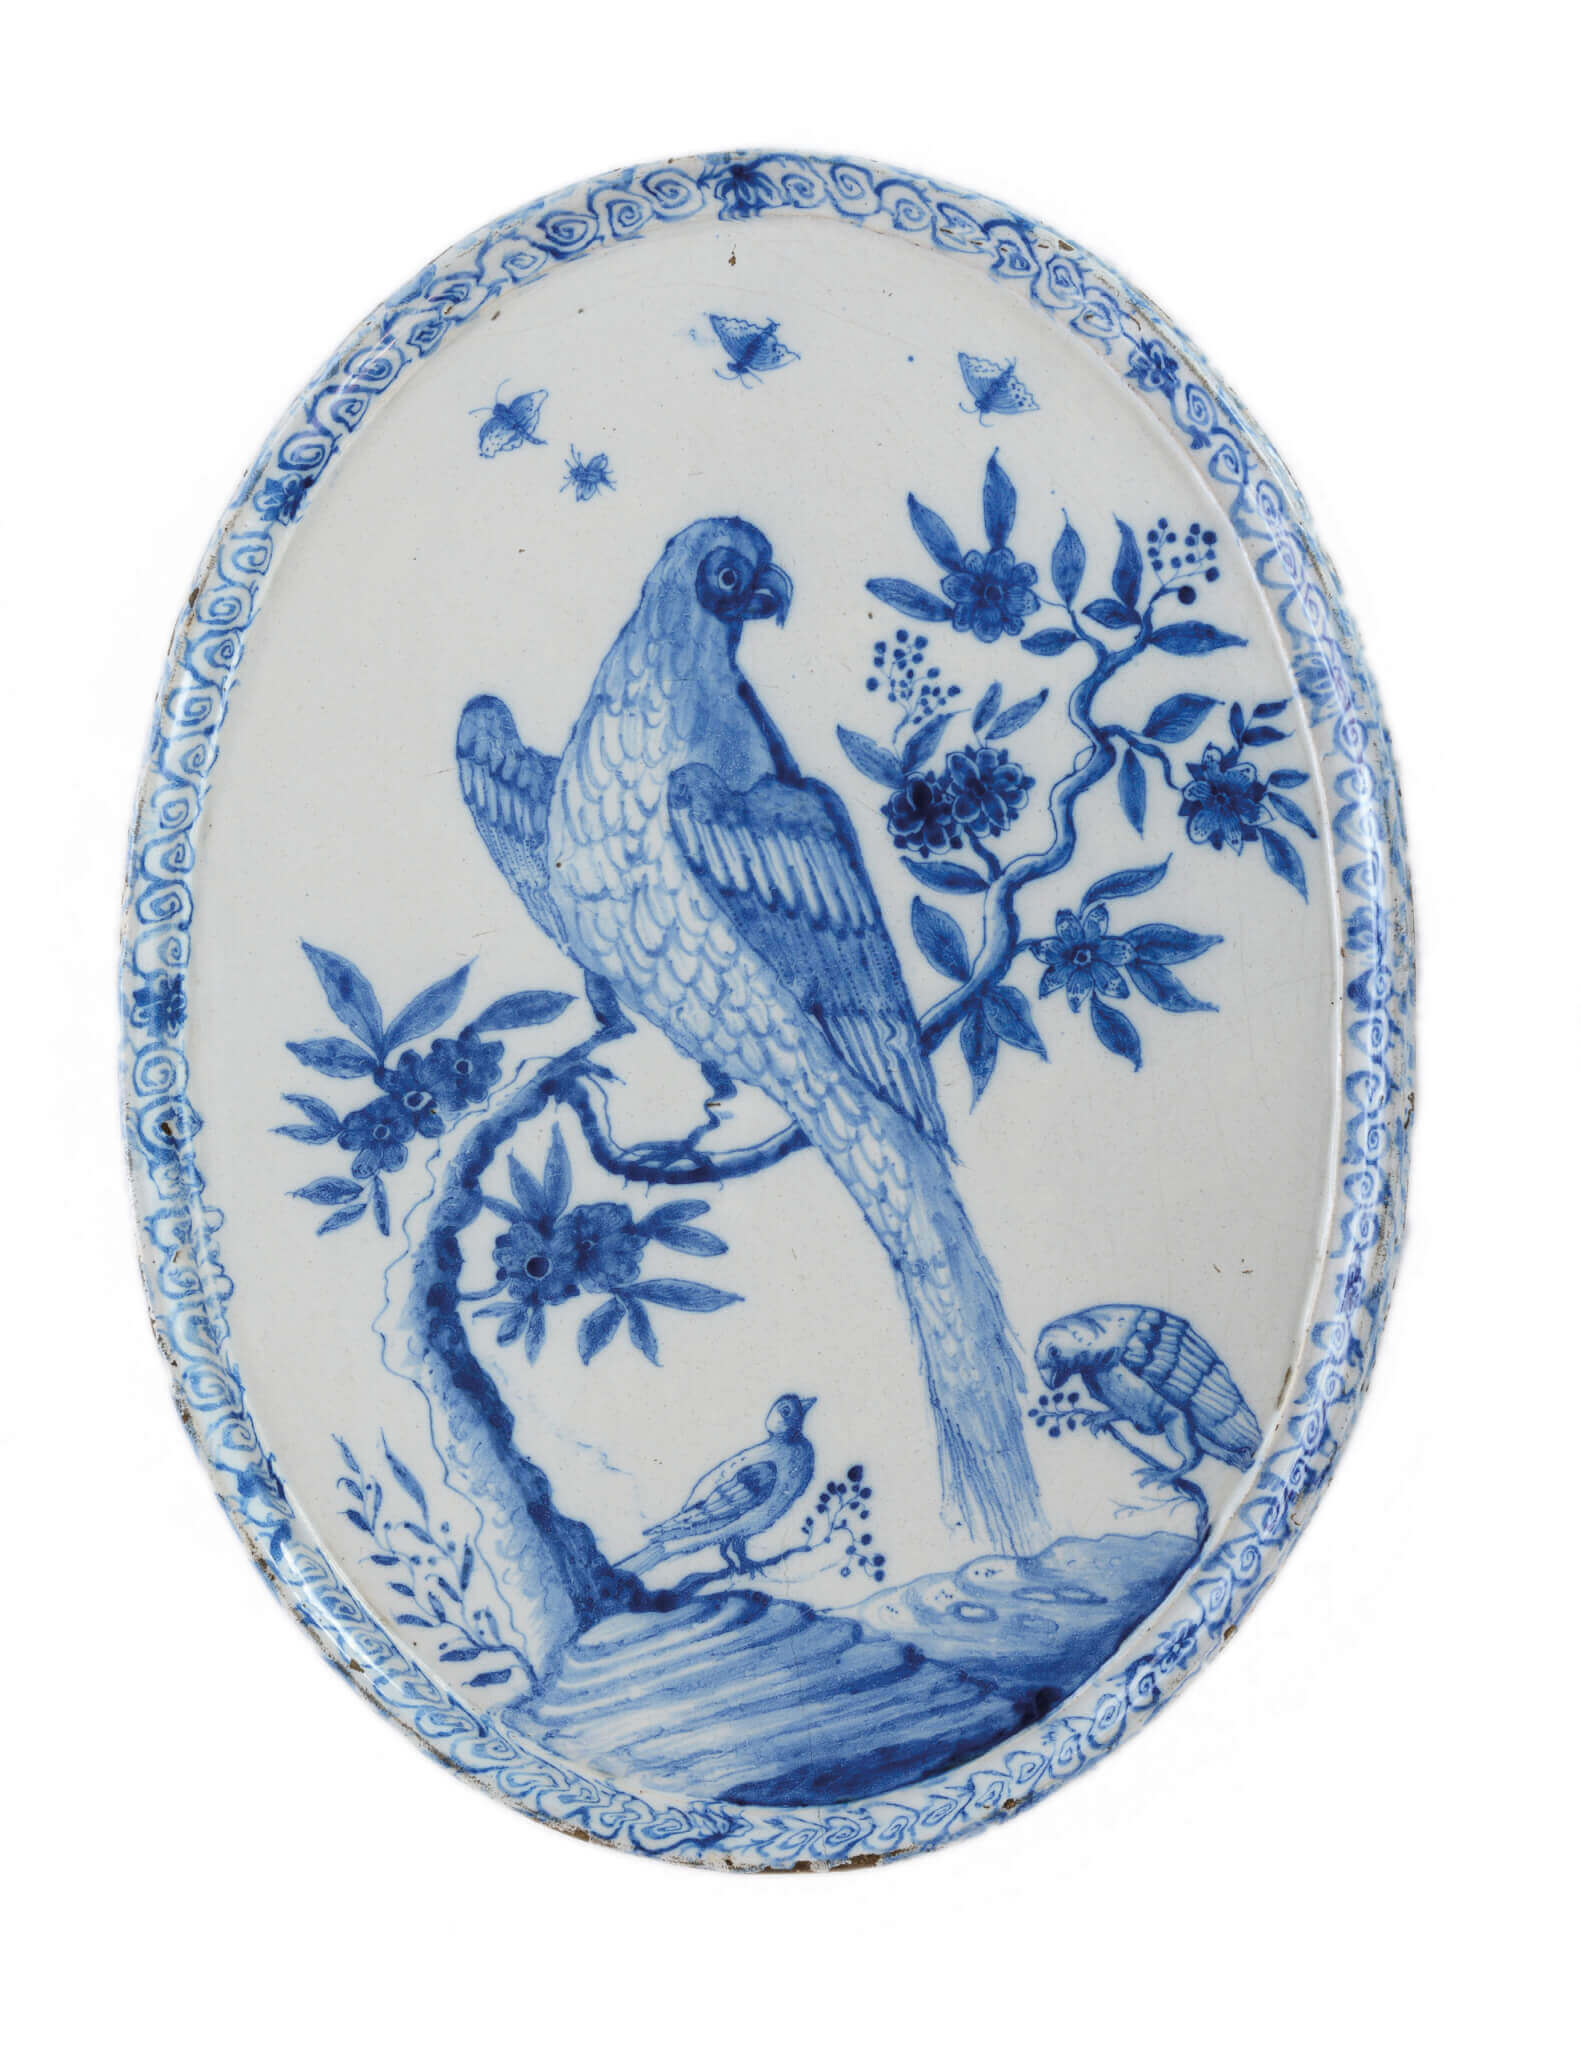 Blue and white Delftware plaque